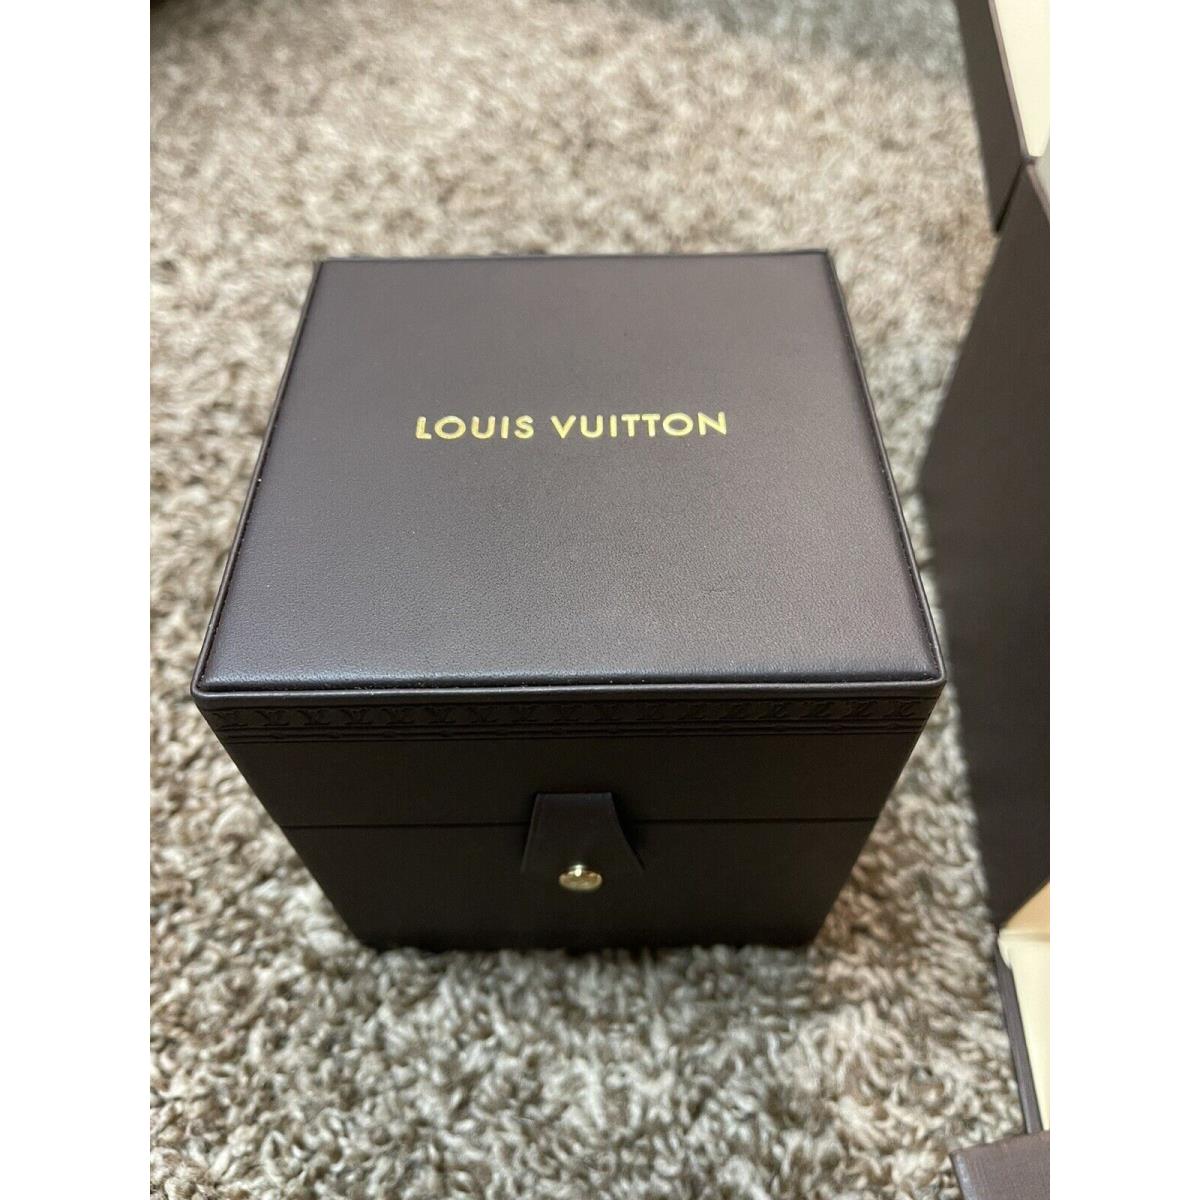 Louis Vuitton Watch Box Watch Case